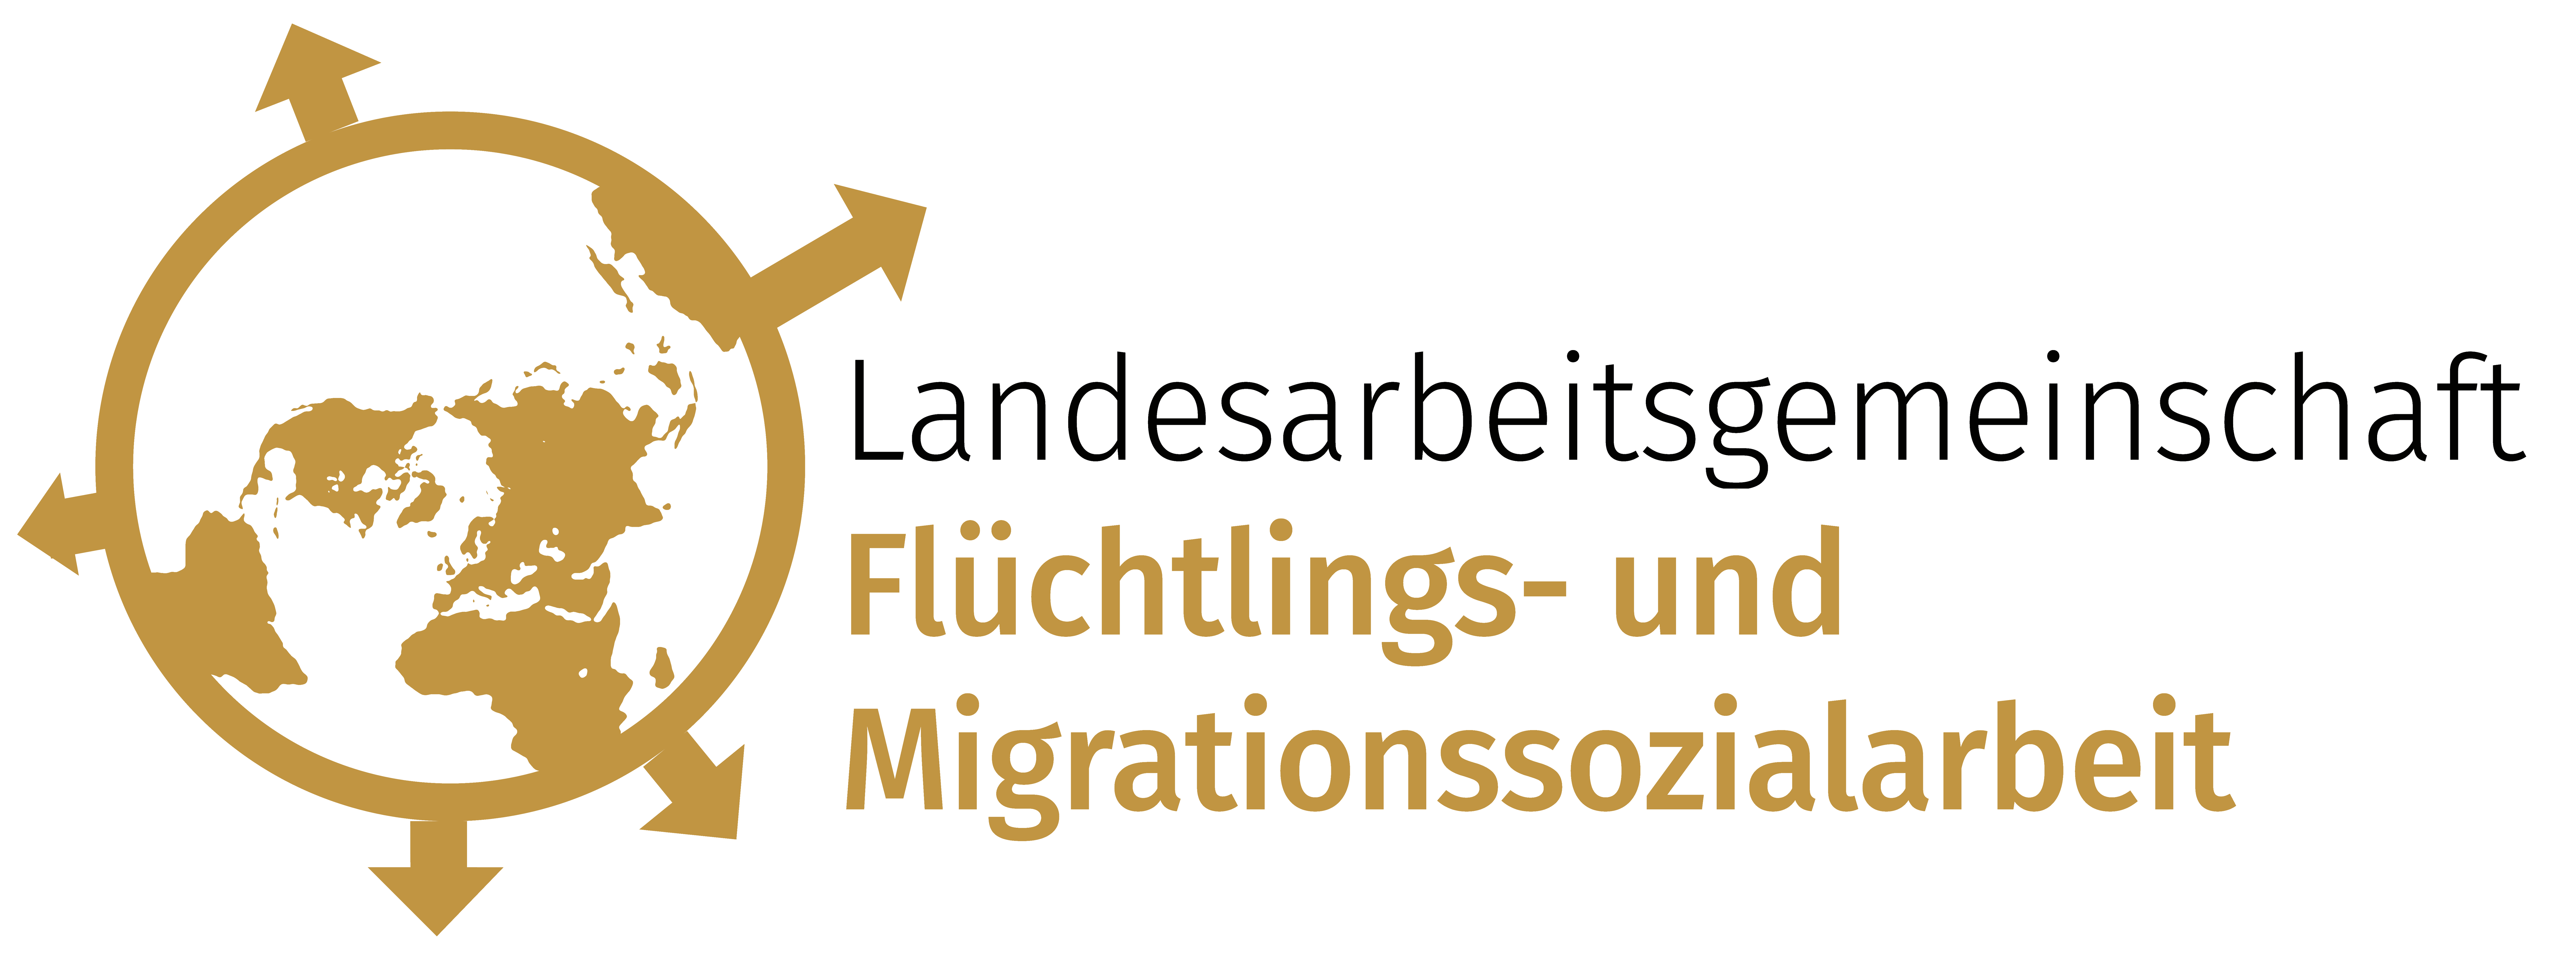 Landesarbeitsgemeinschaft Flüchtlingssozialarbeit/Migrationssozialarbeit Sachsen